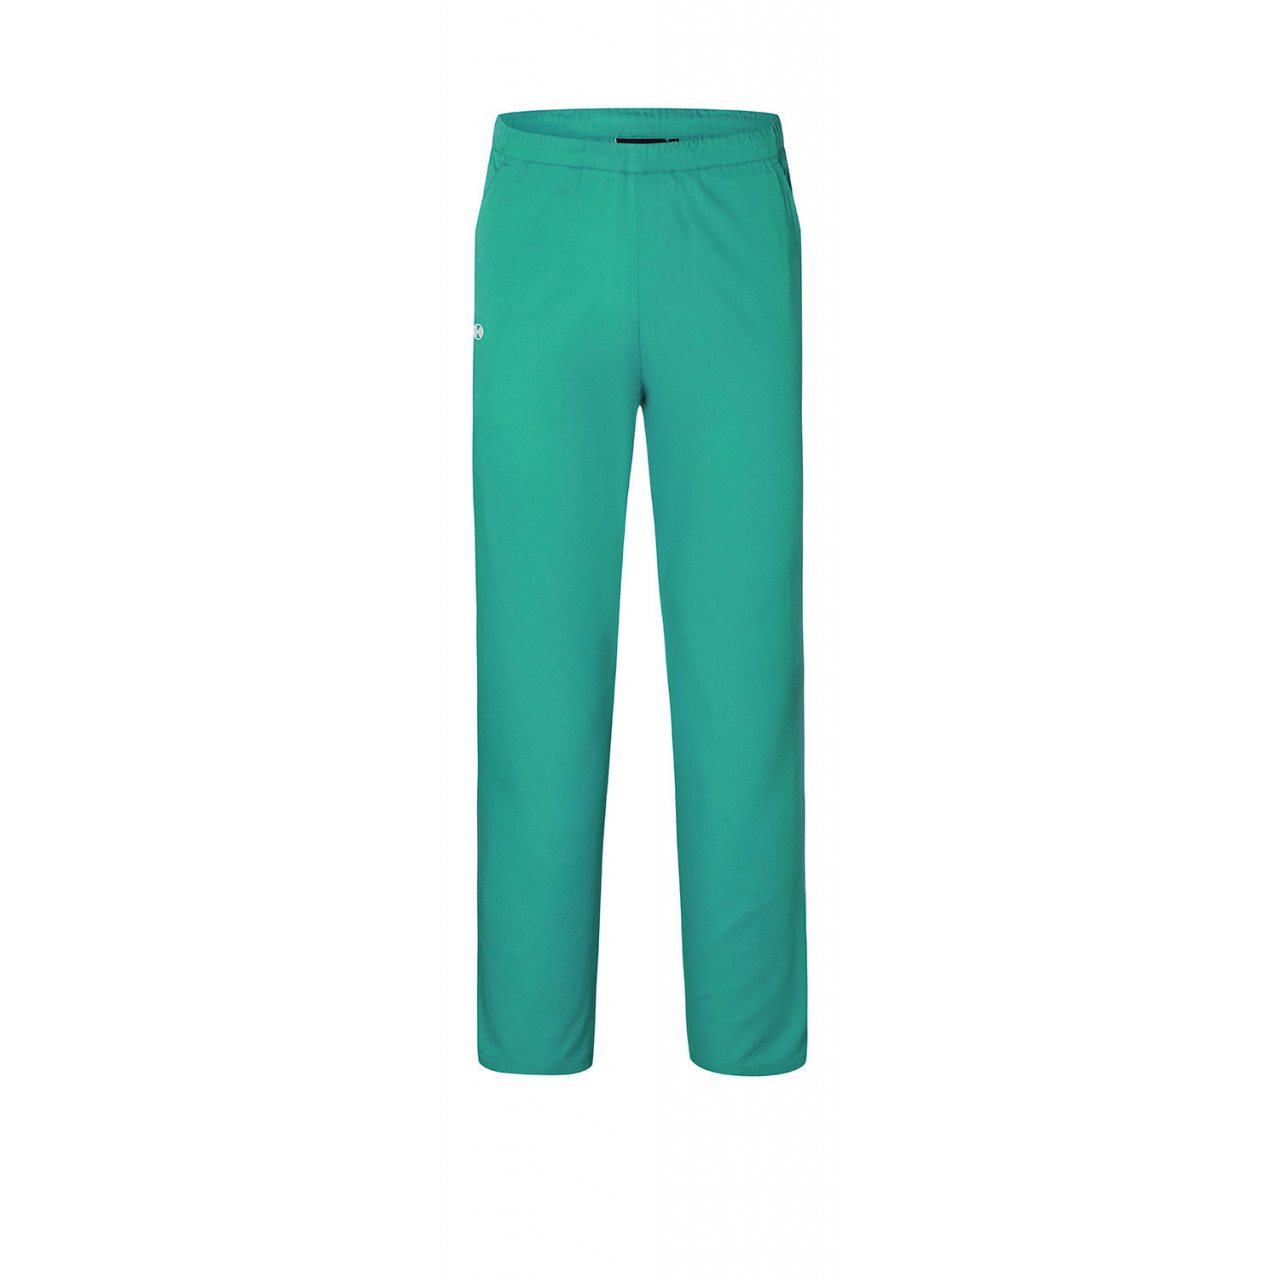 Kalhoty Karlowsky Essential - zelené, L